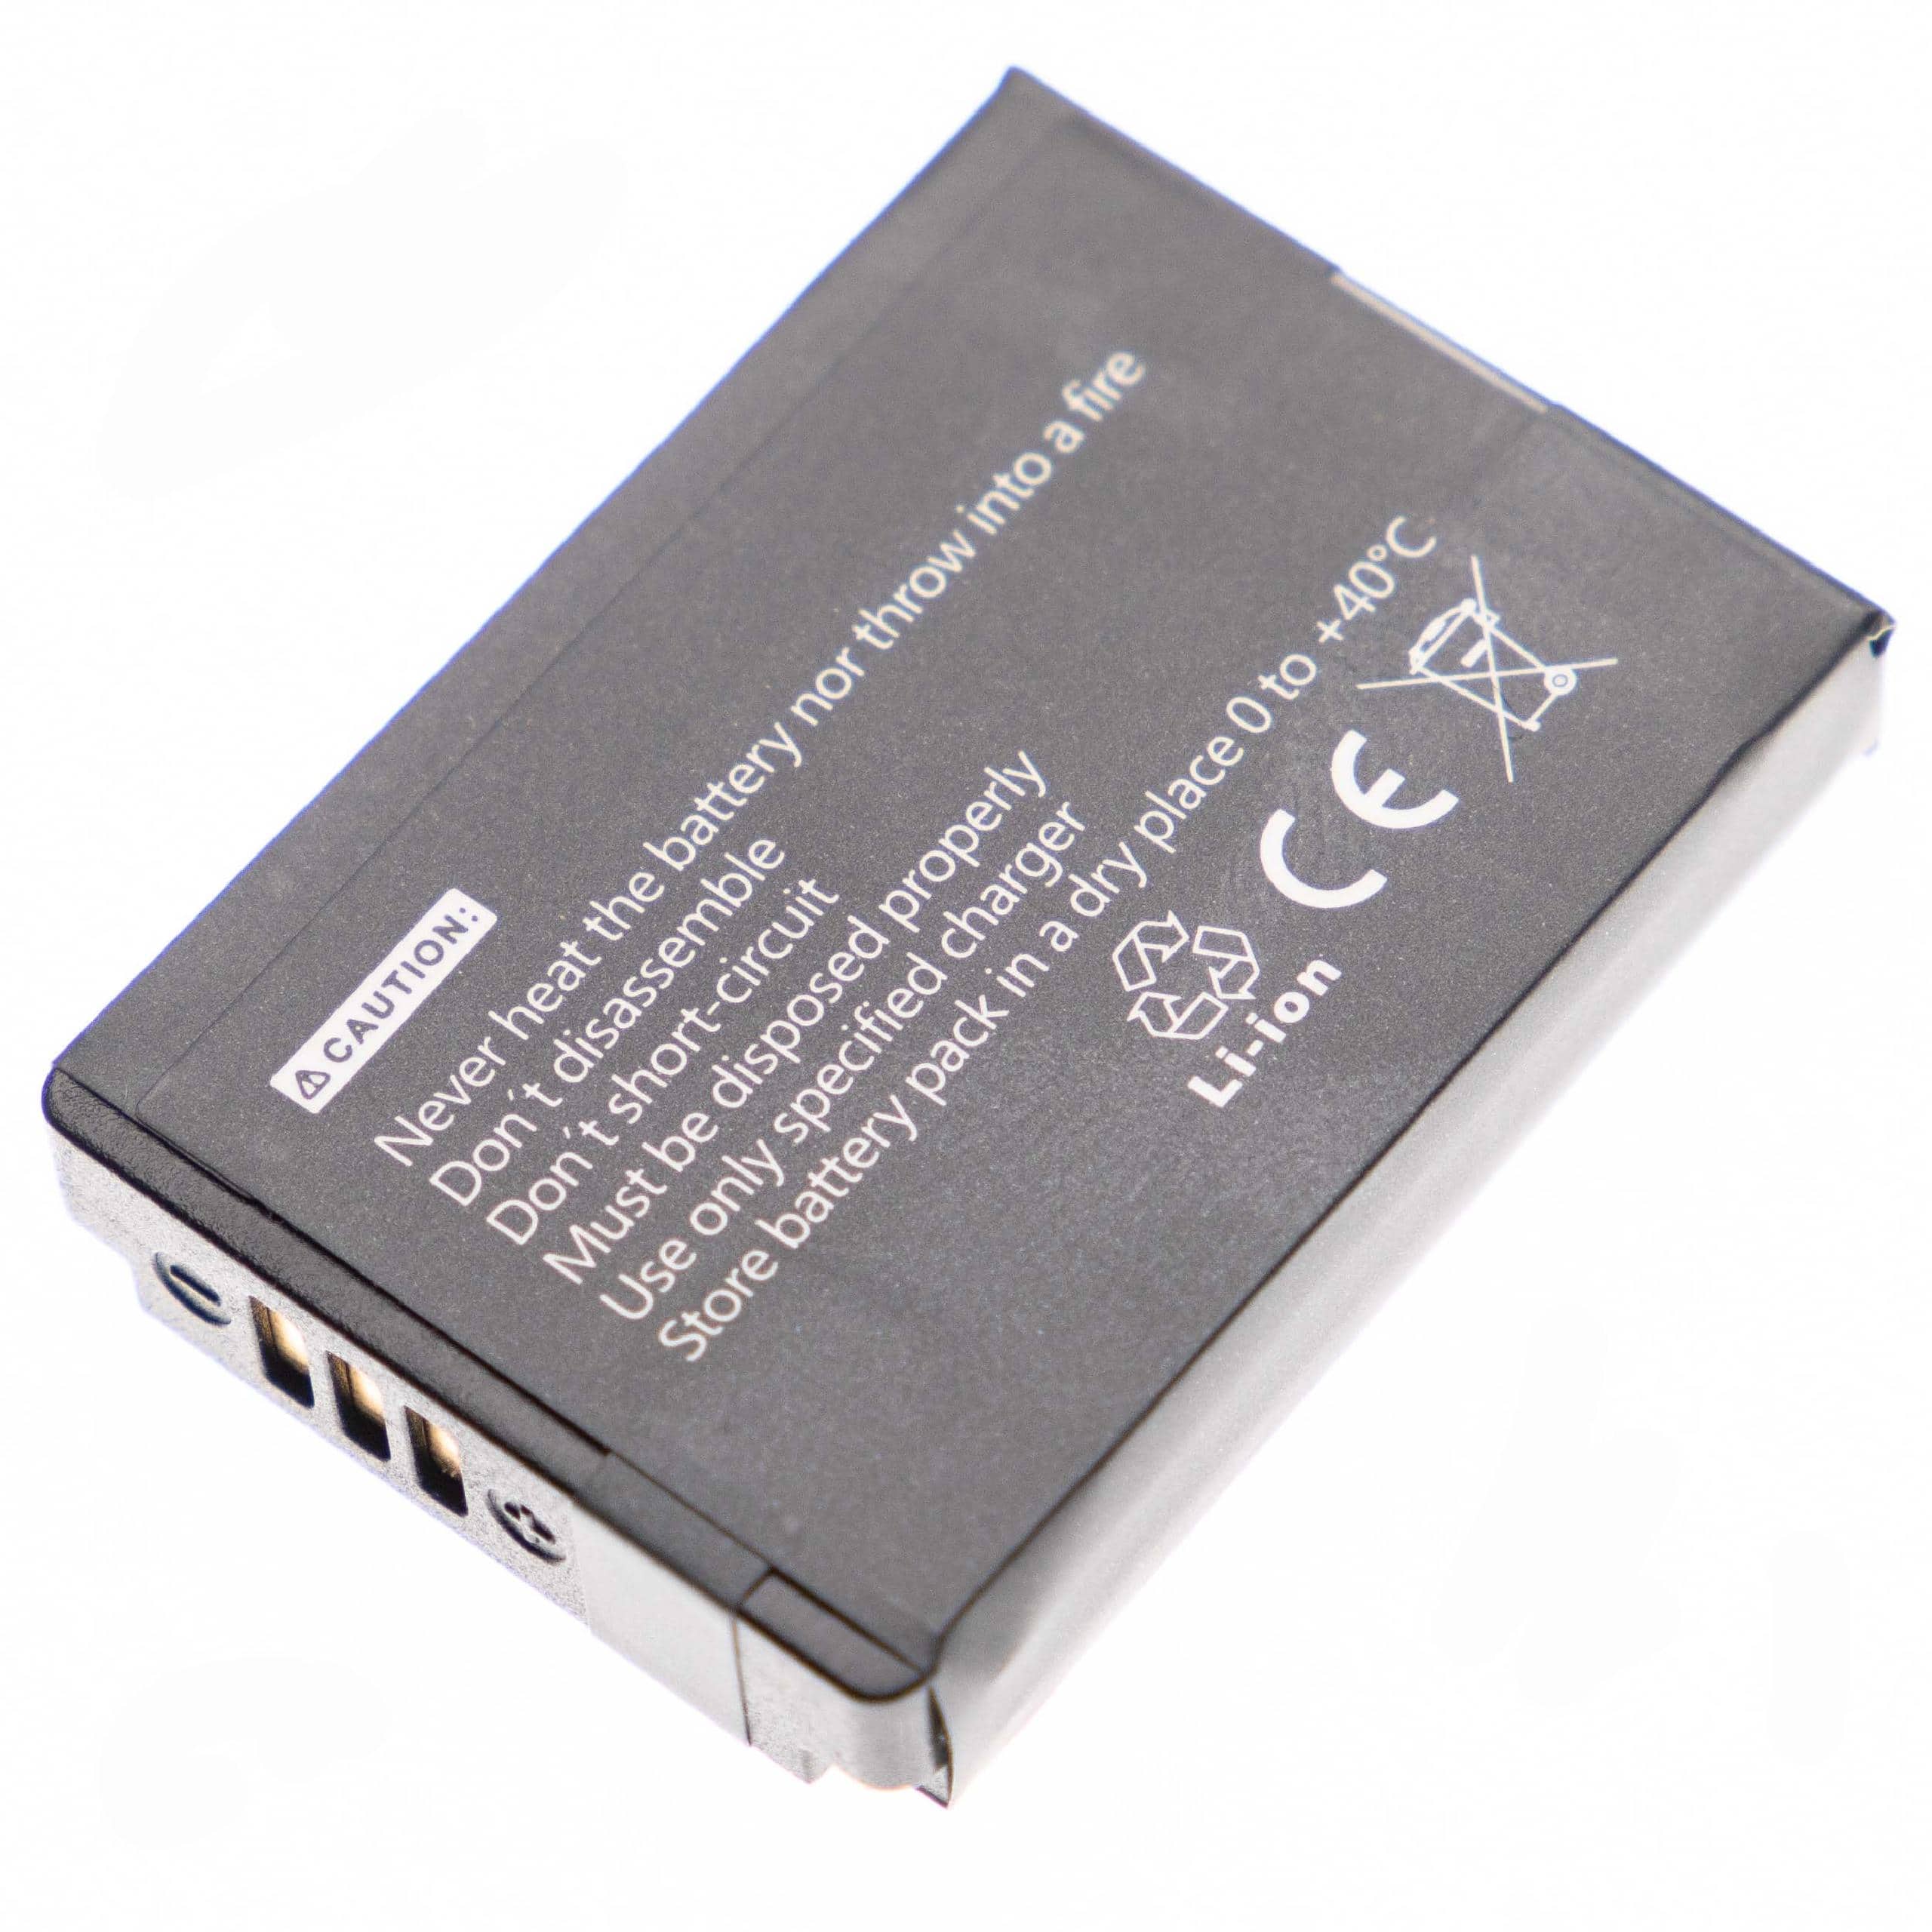 Akumulator do słuchawek bezprzewodowych zamiennik Parrot 1ICP7/28/35, PF56100, MH46671 - 750 mAh 3,7 V Li-Ion